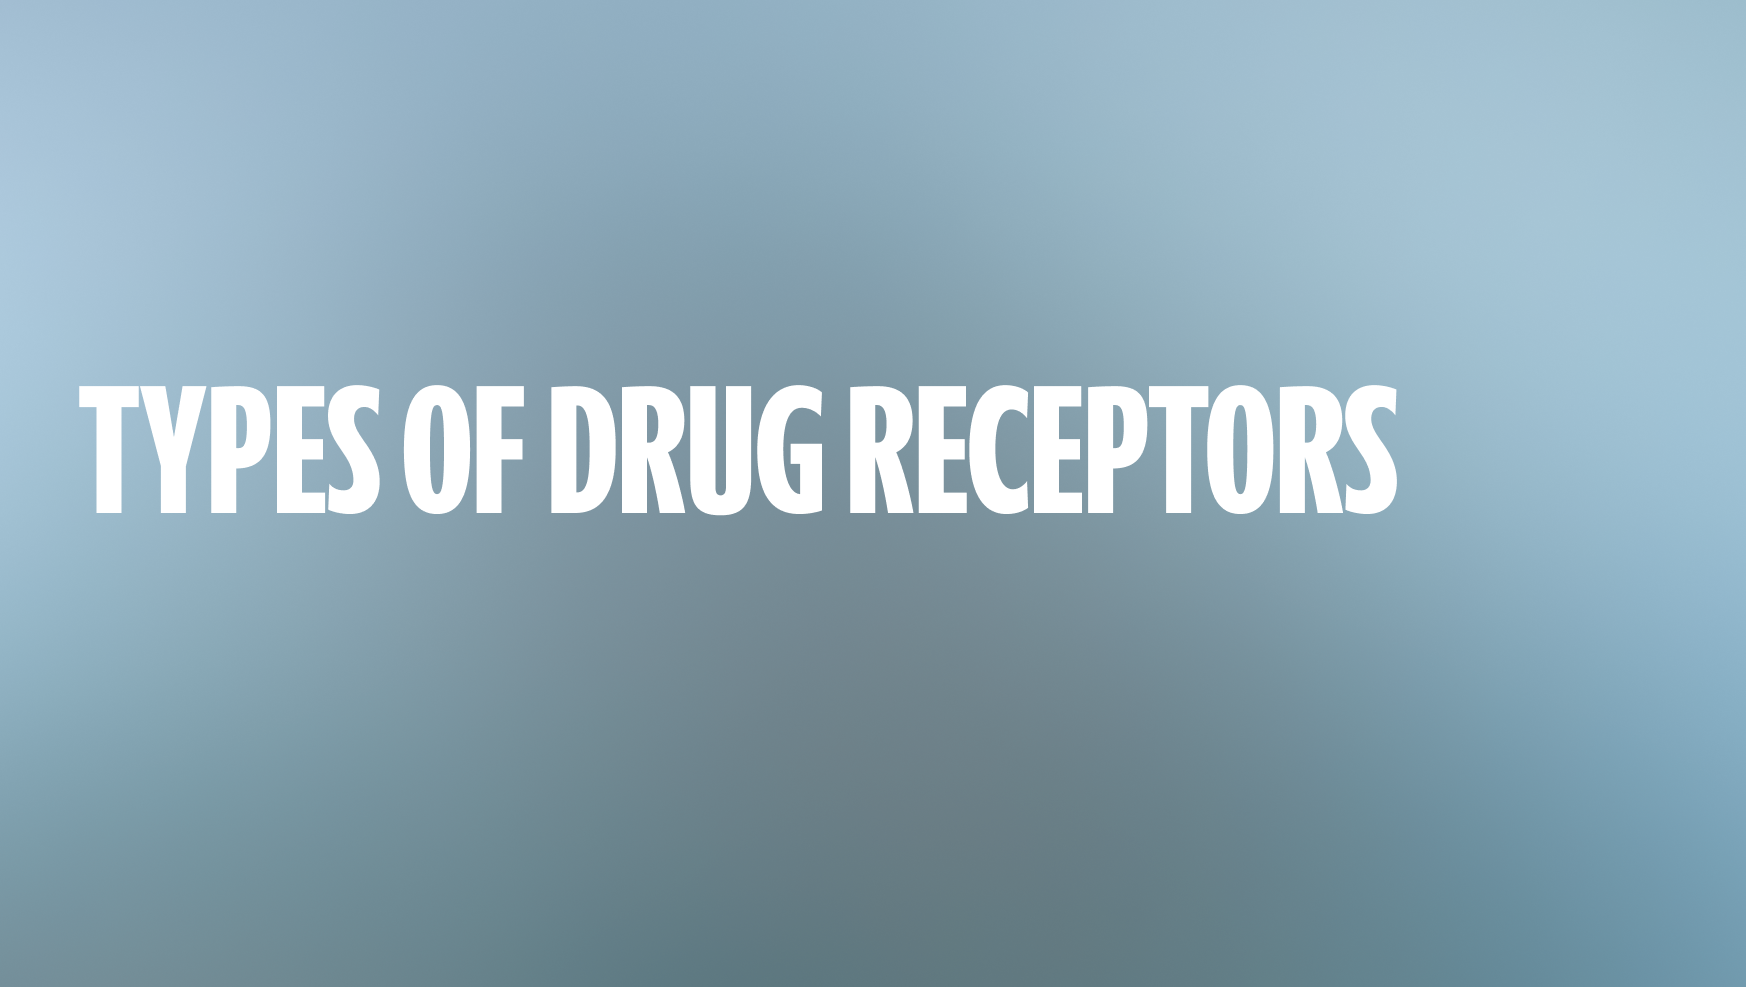 Types of Drug Receptors